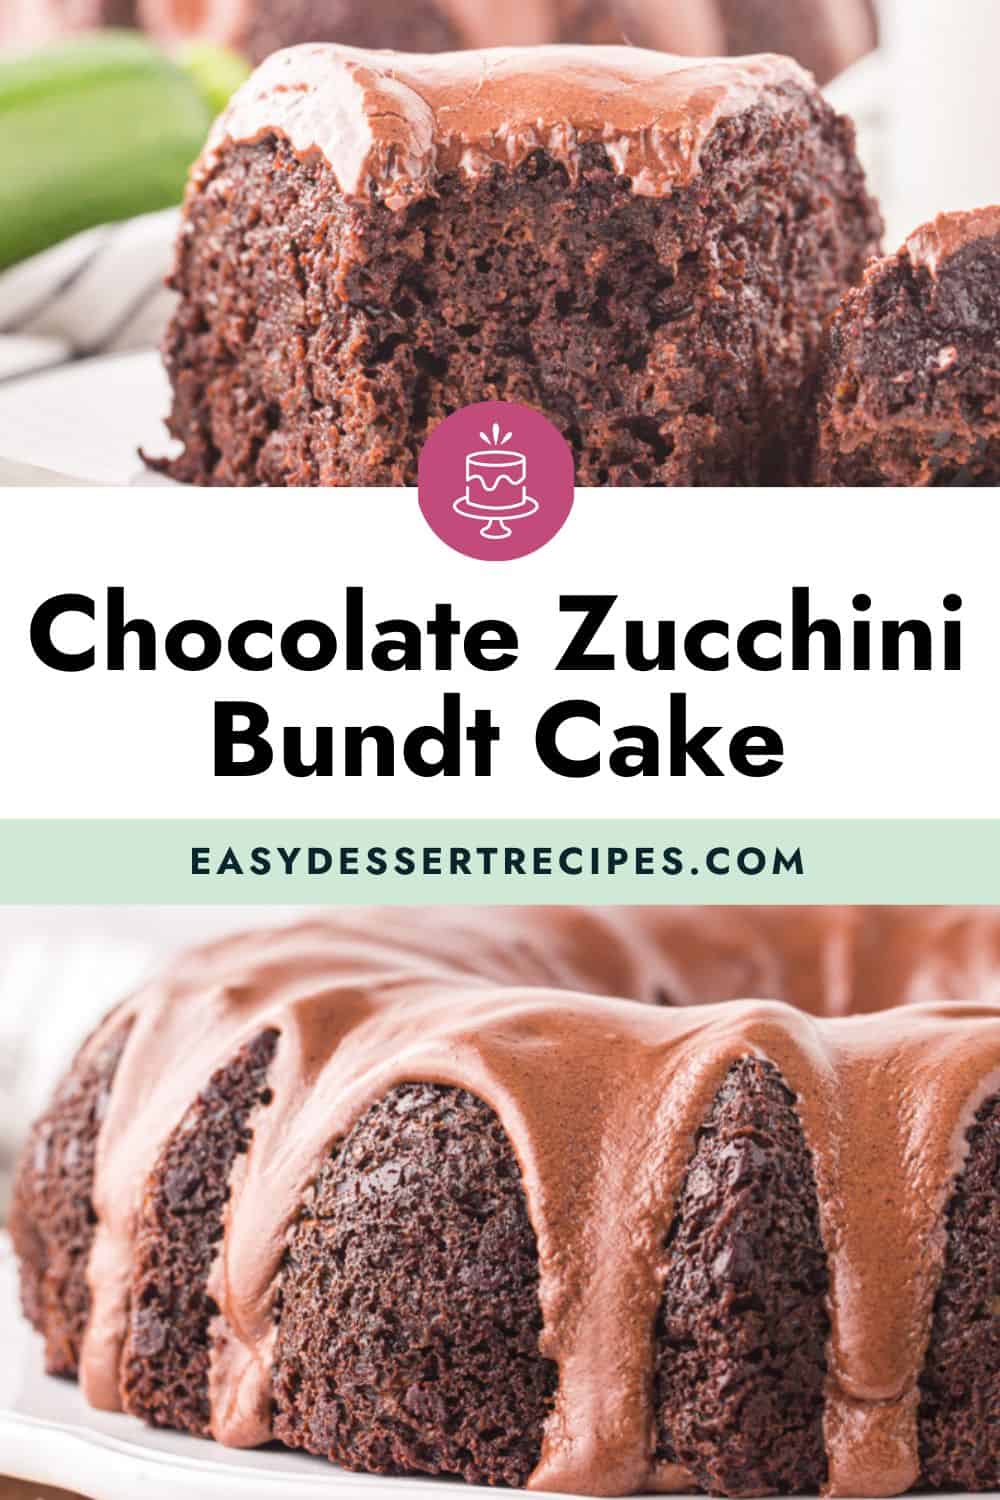 Chocolate zucchini bundt cake.